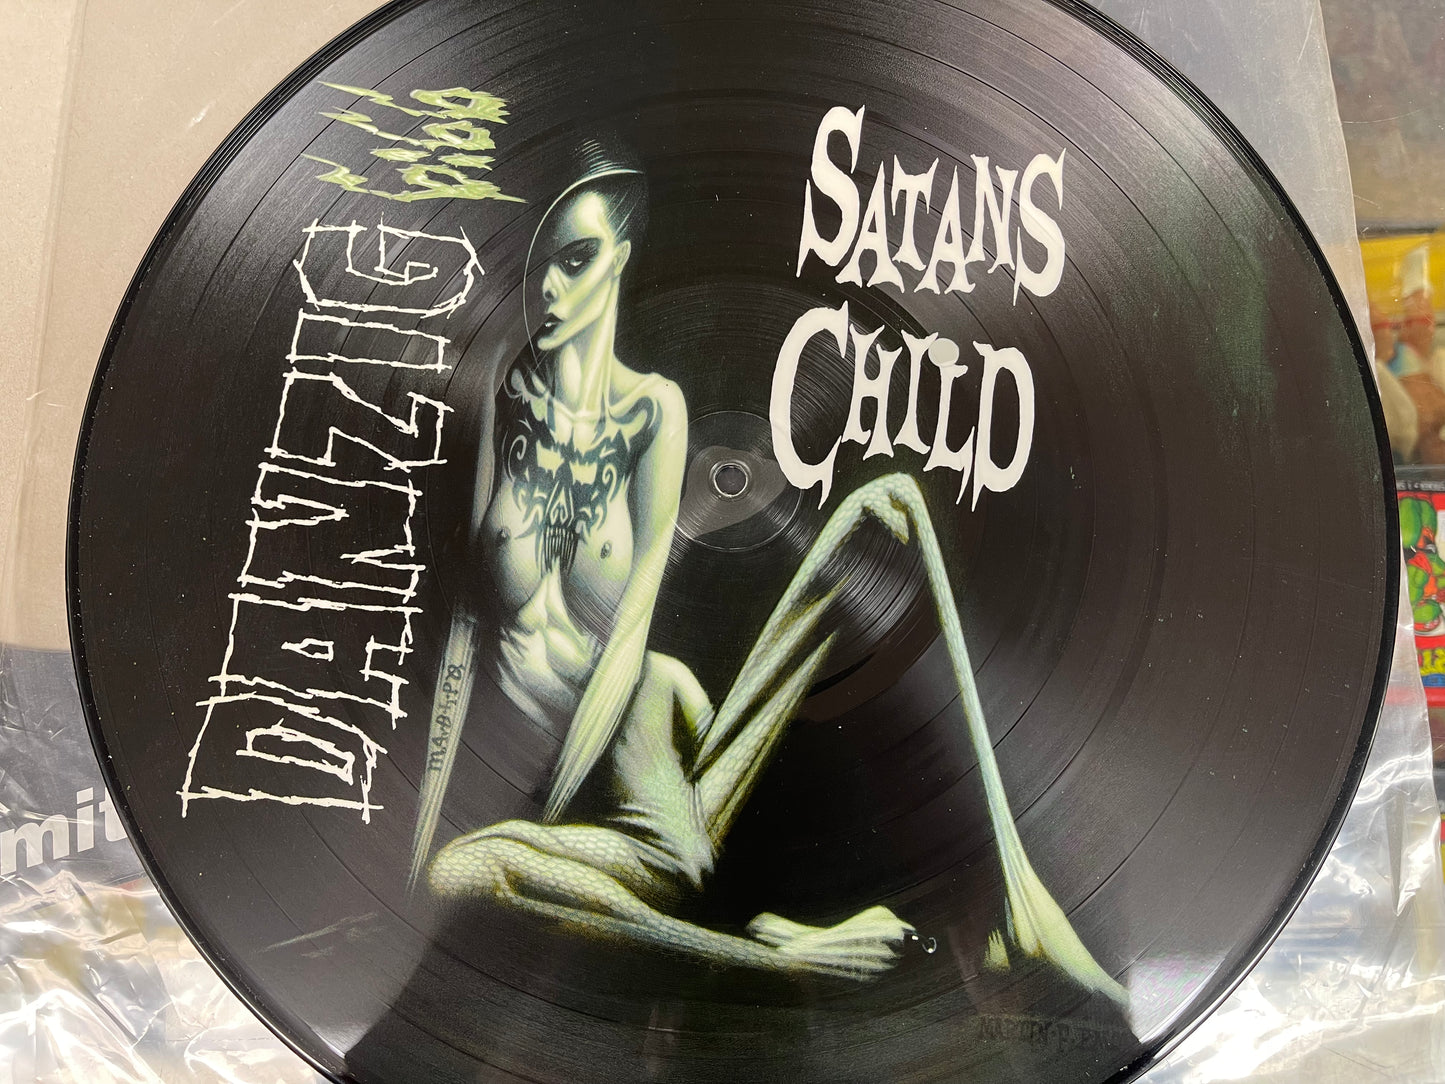 Danzig - 6:66 Satans Child (1999, German Picture Disk)